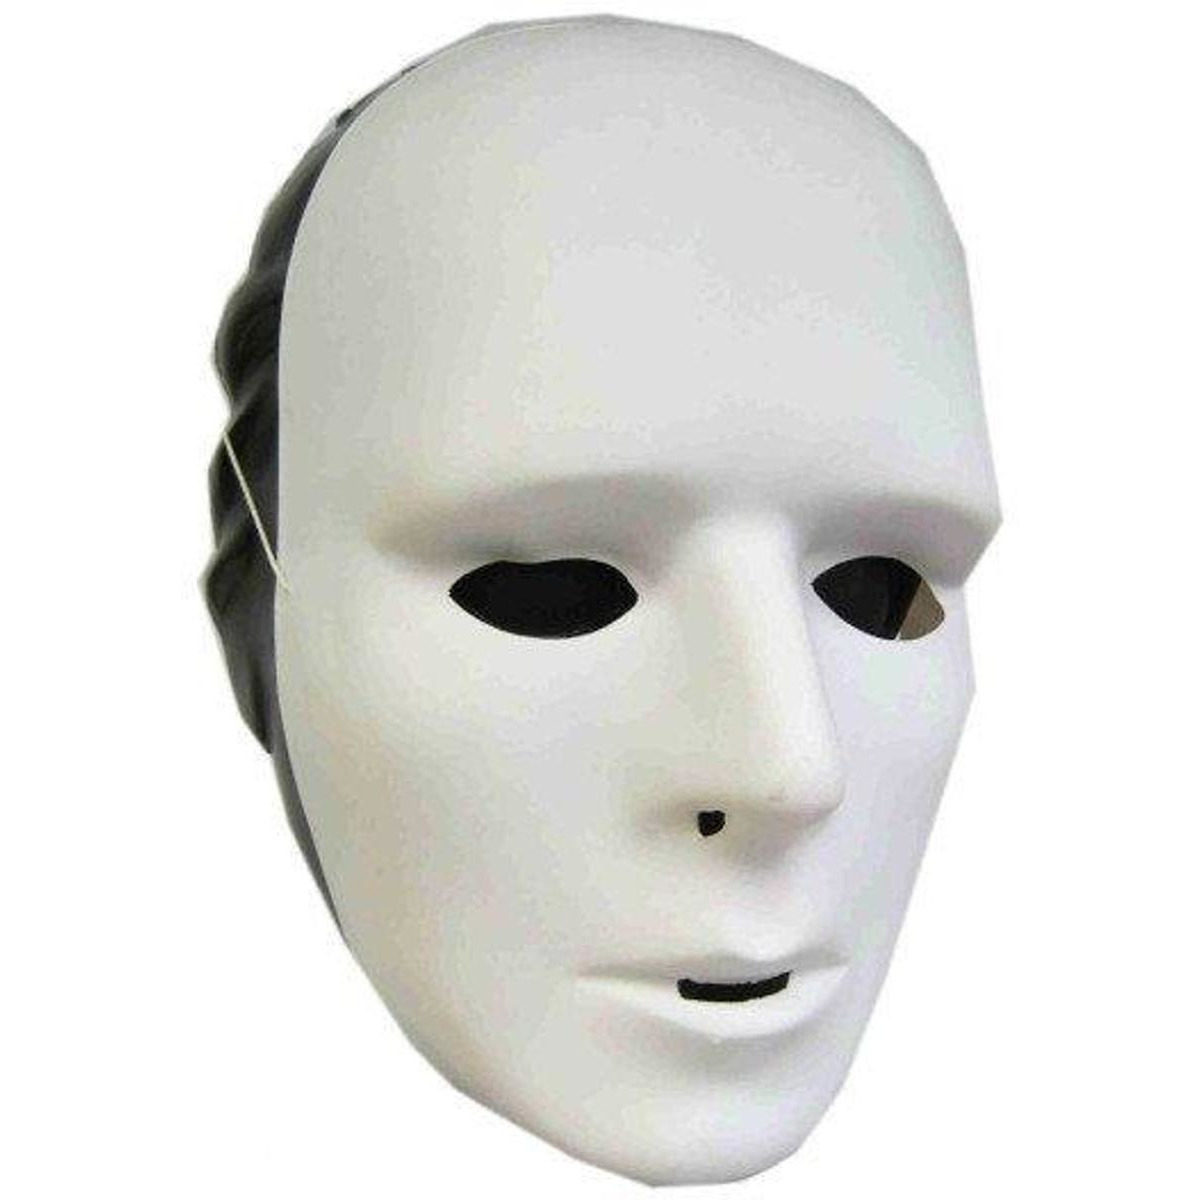 Grimeer maskers wit van kunststof